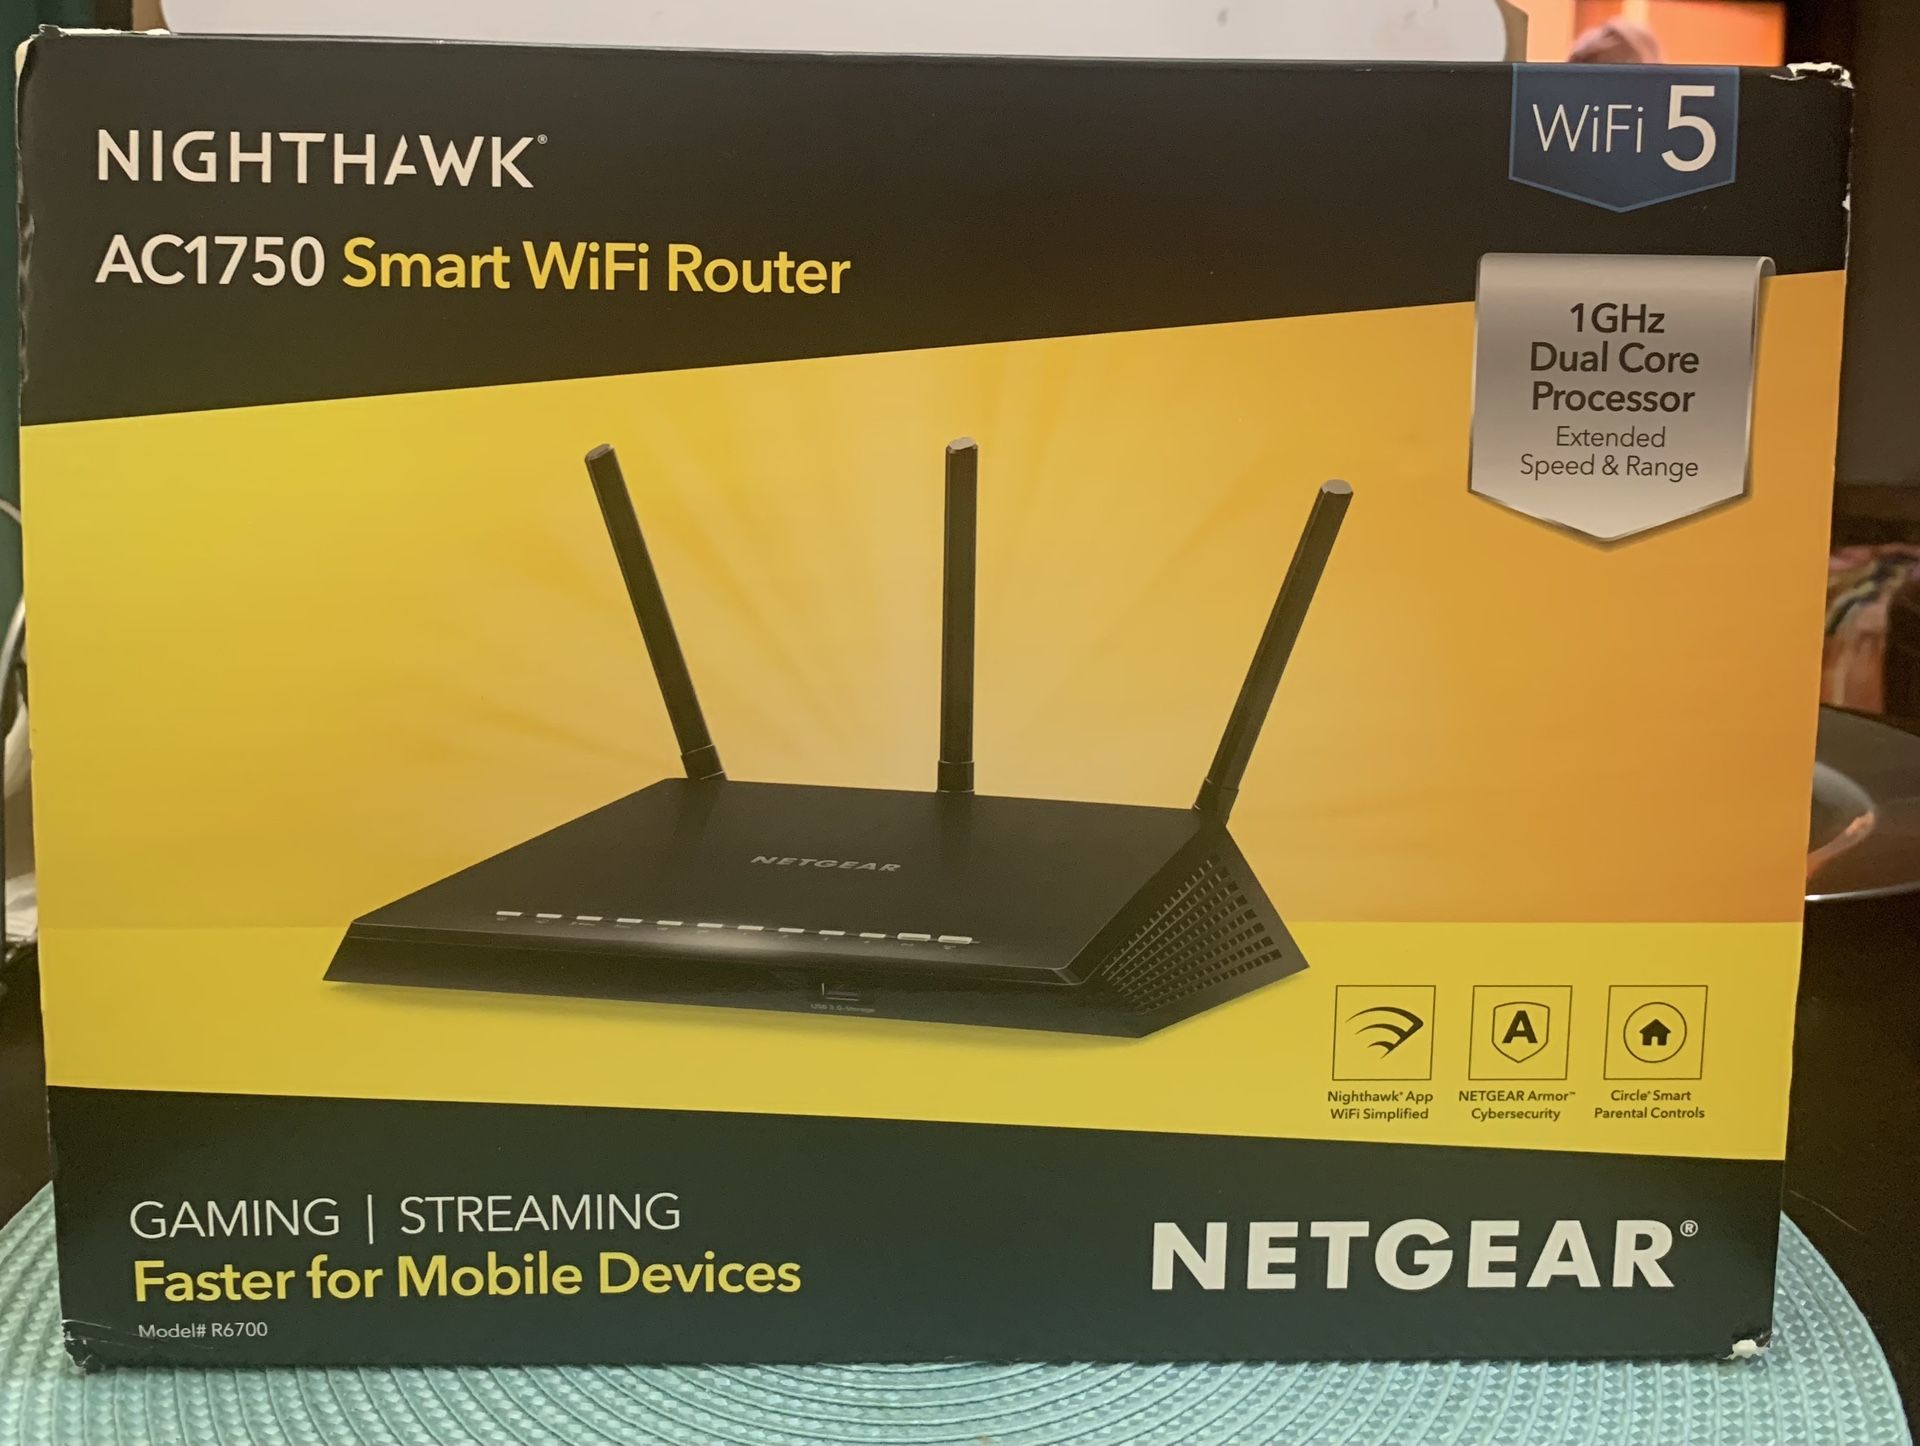 NETGEAR Nighthawk Smart Wi-Fi Router, R6700 - AC1750 Wireless Speed Up to 1750